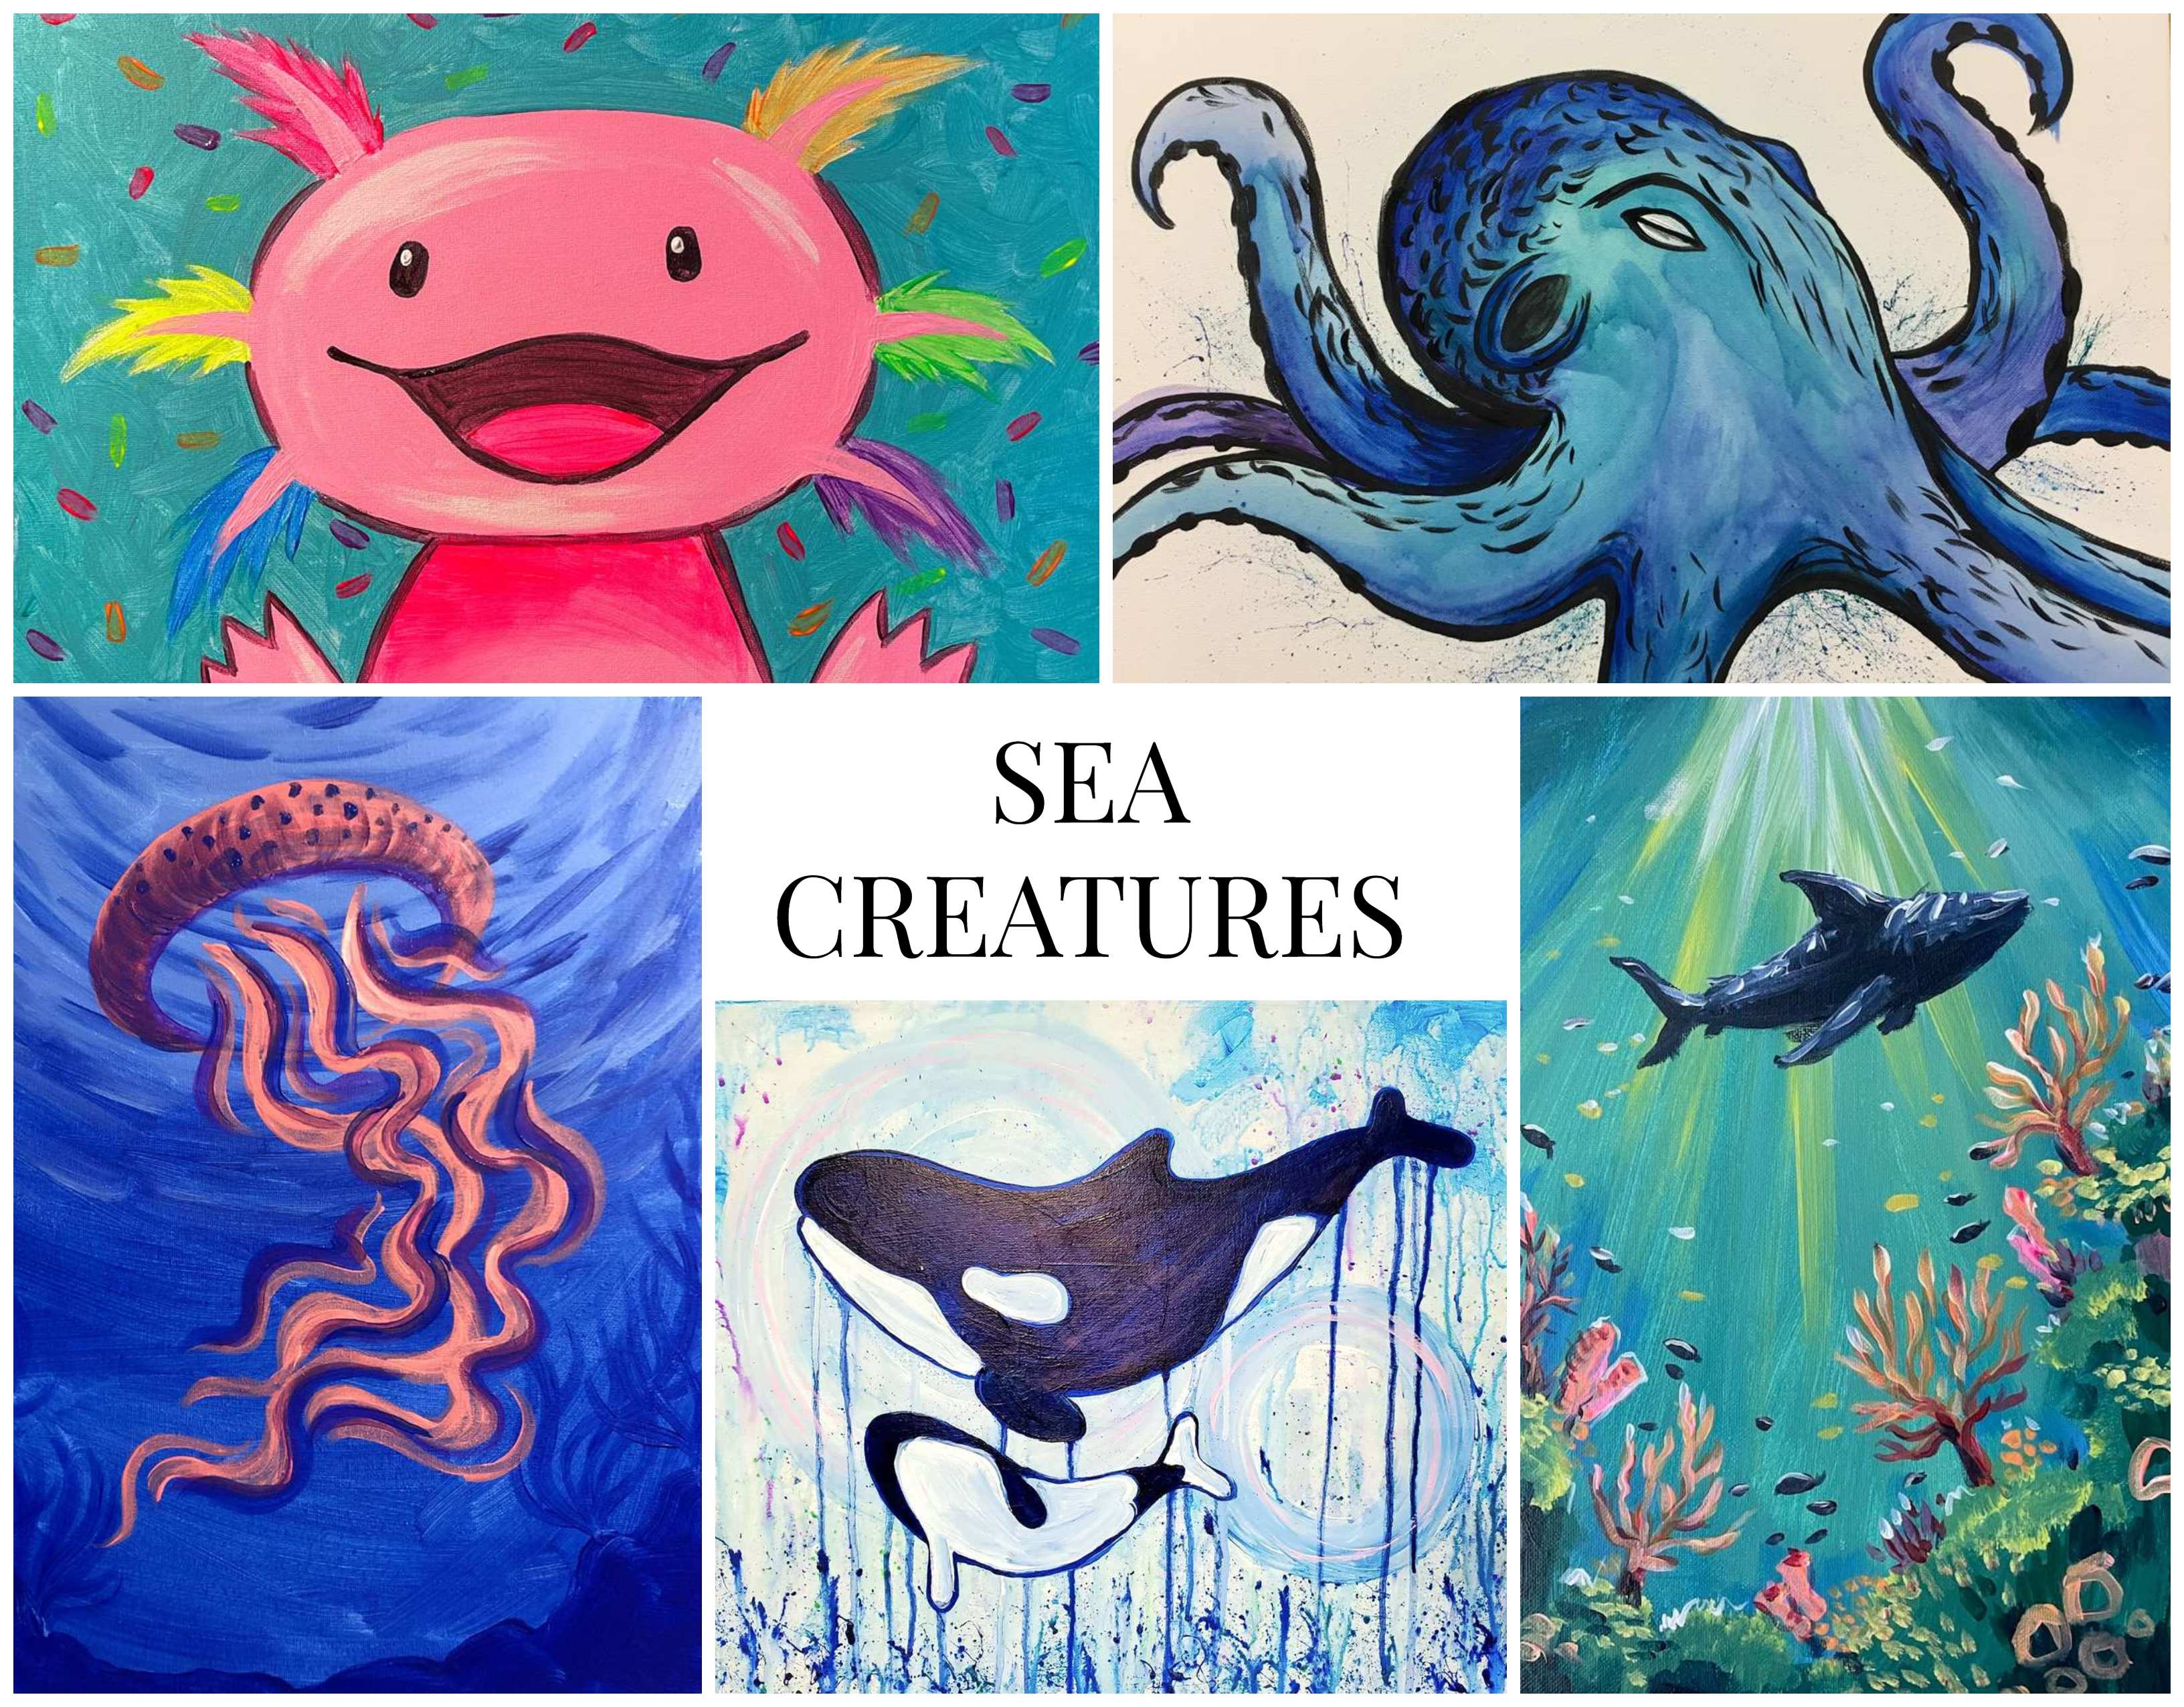 Full Week Camp - Theme: Sea Creatures